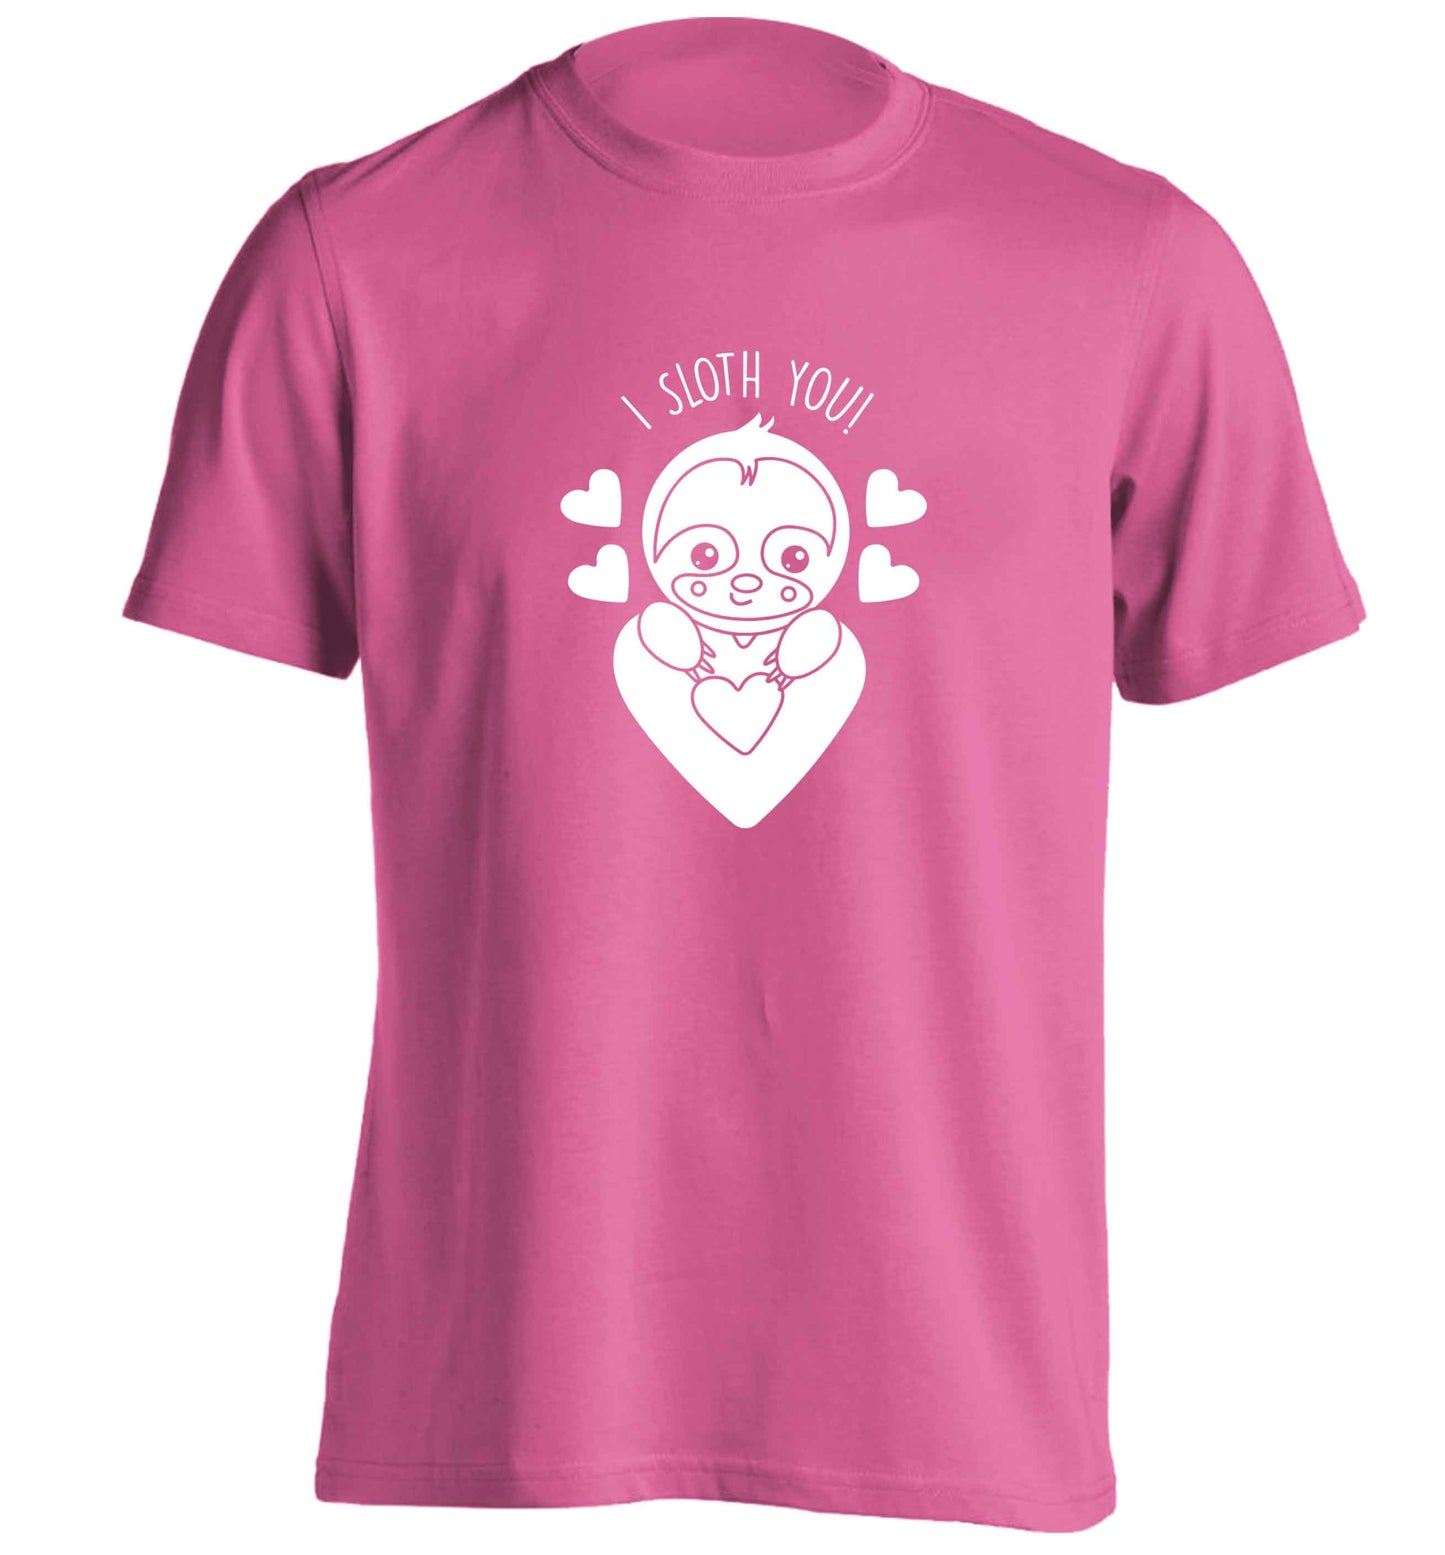 I sloth you adults unisex pink Tshirt 2XL